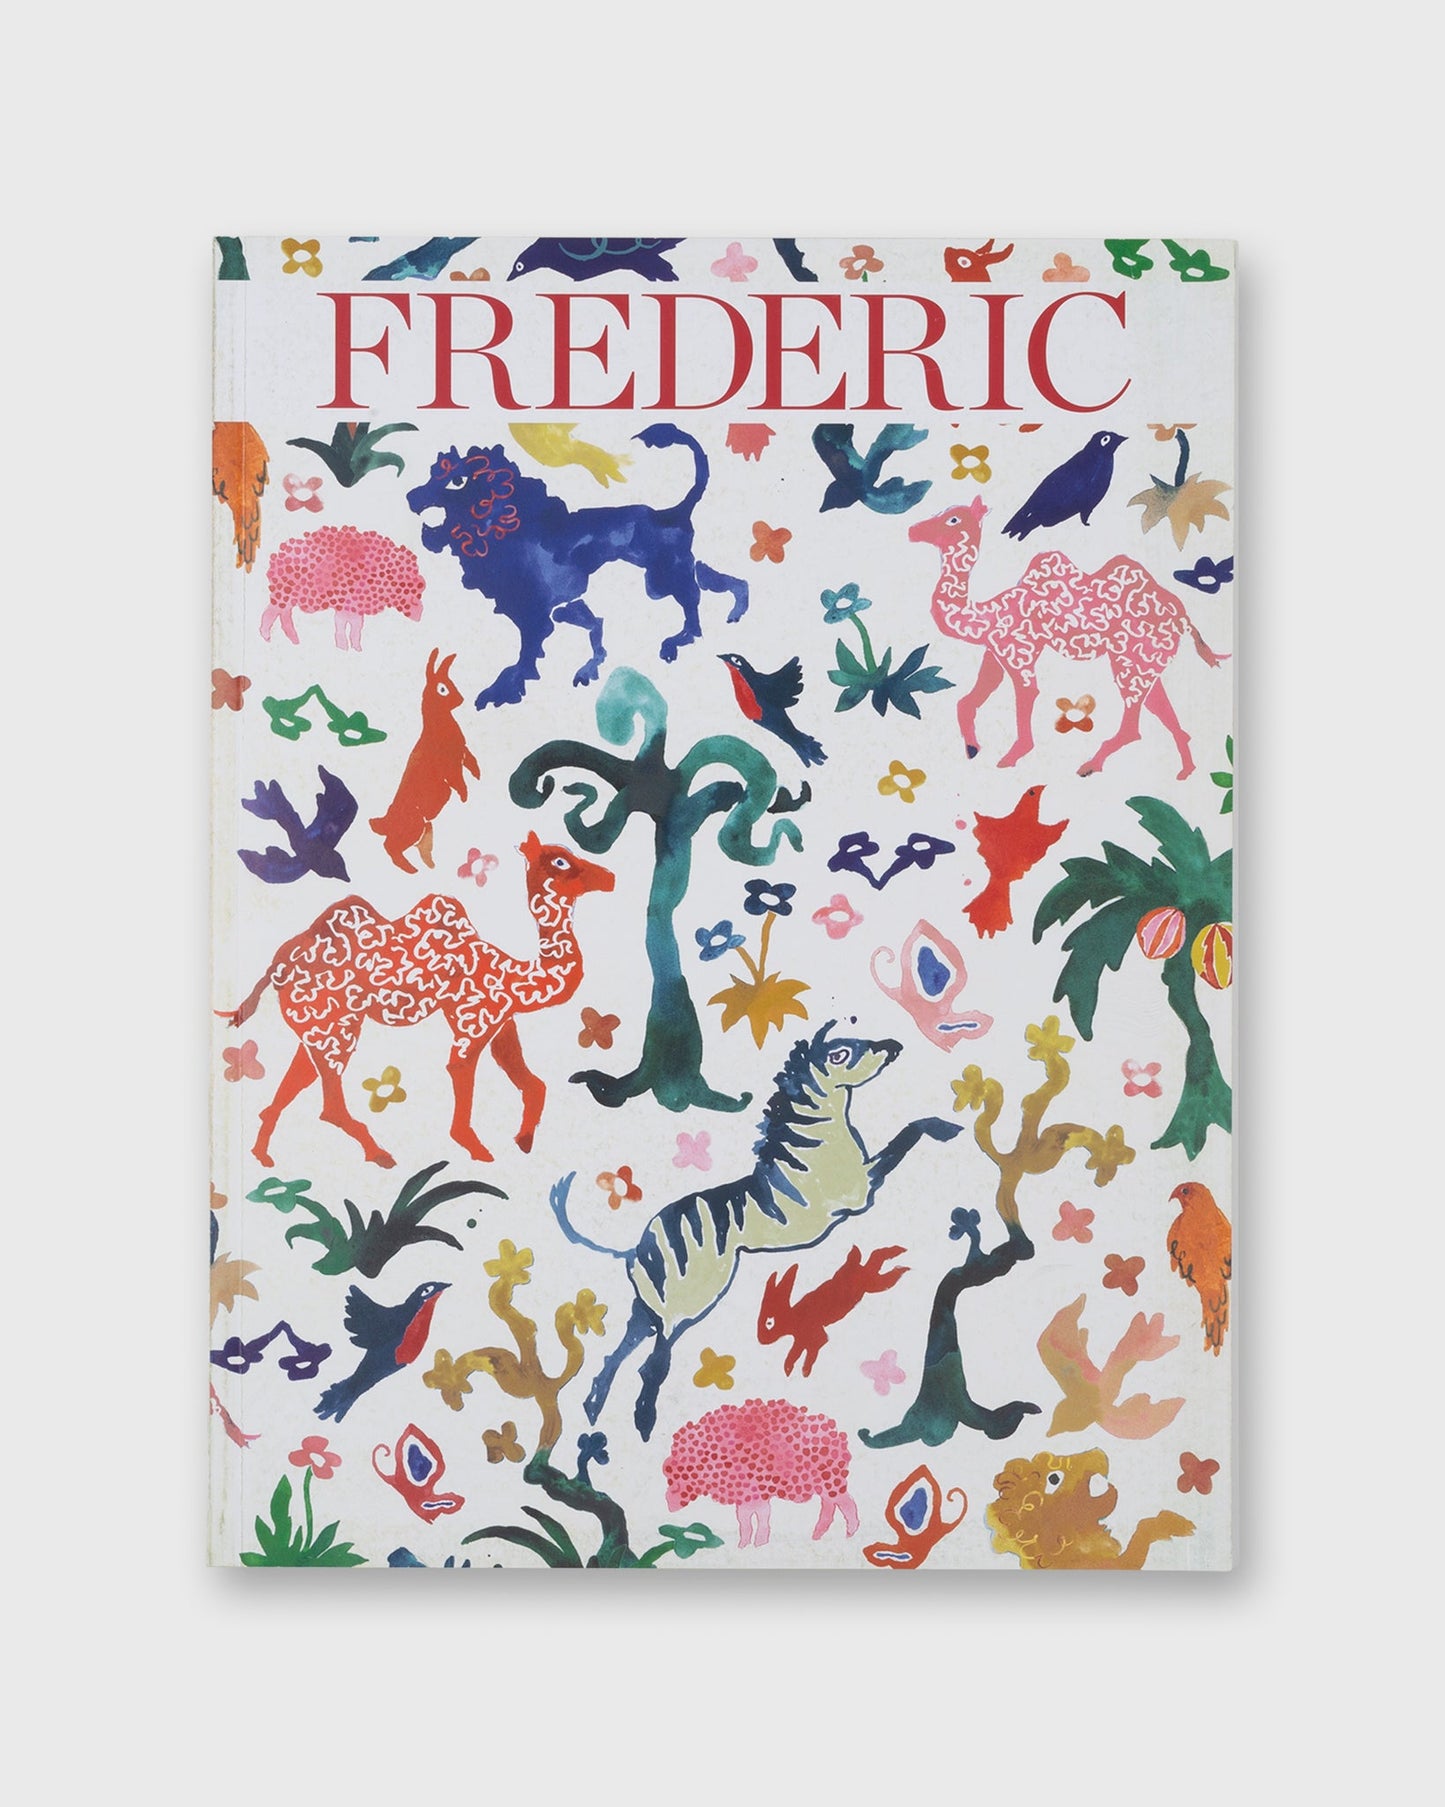 Frederic Magazine